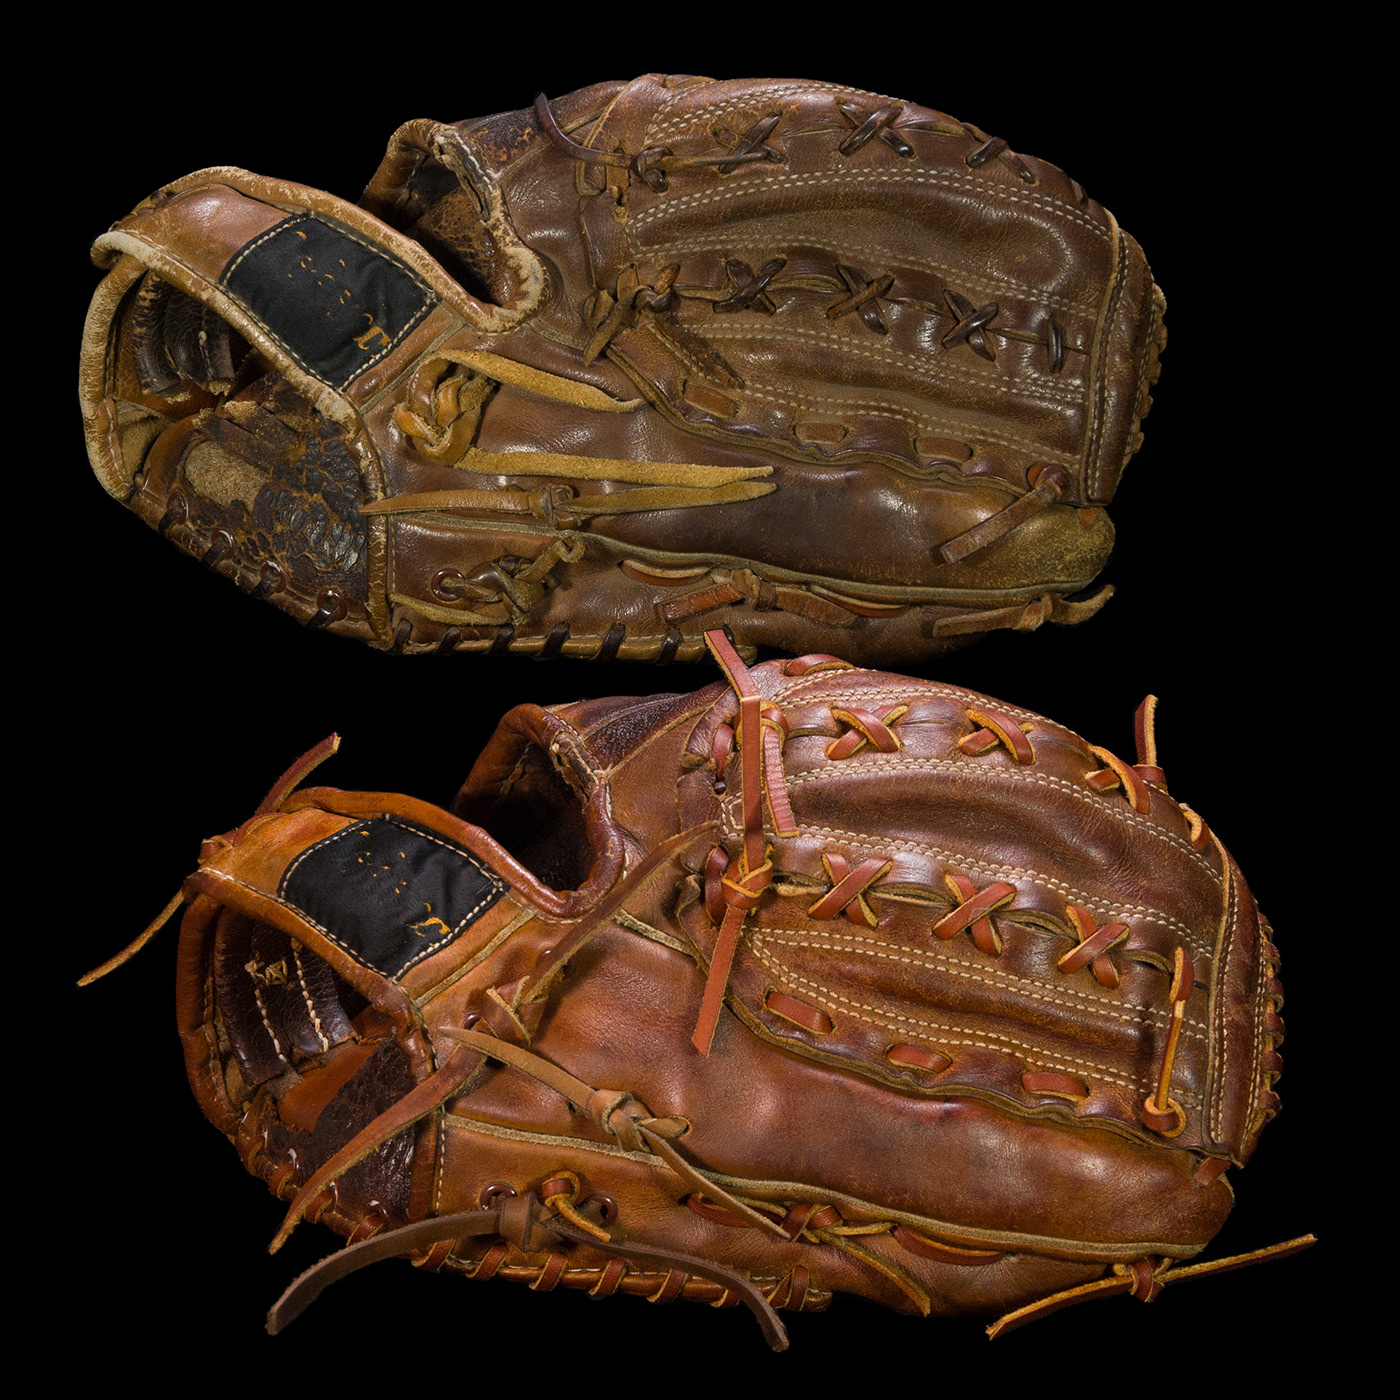 Gowdy Gloves Baseball Glove Relace Sports Design leather baseball Richmond rva Baseball Glove Restore nokona